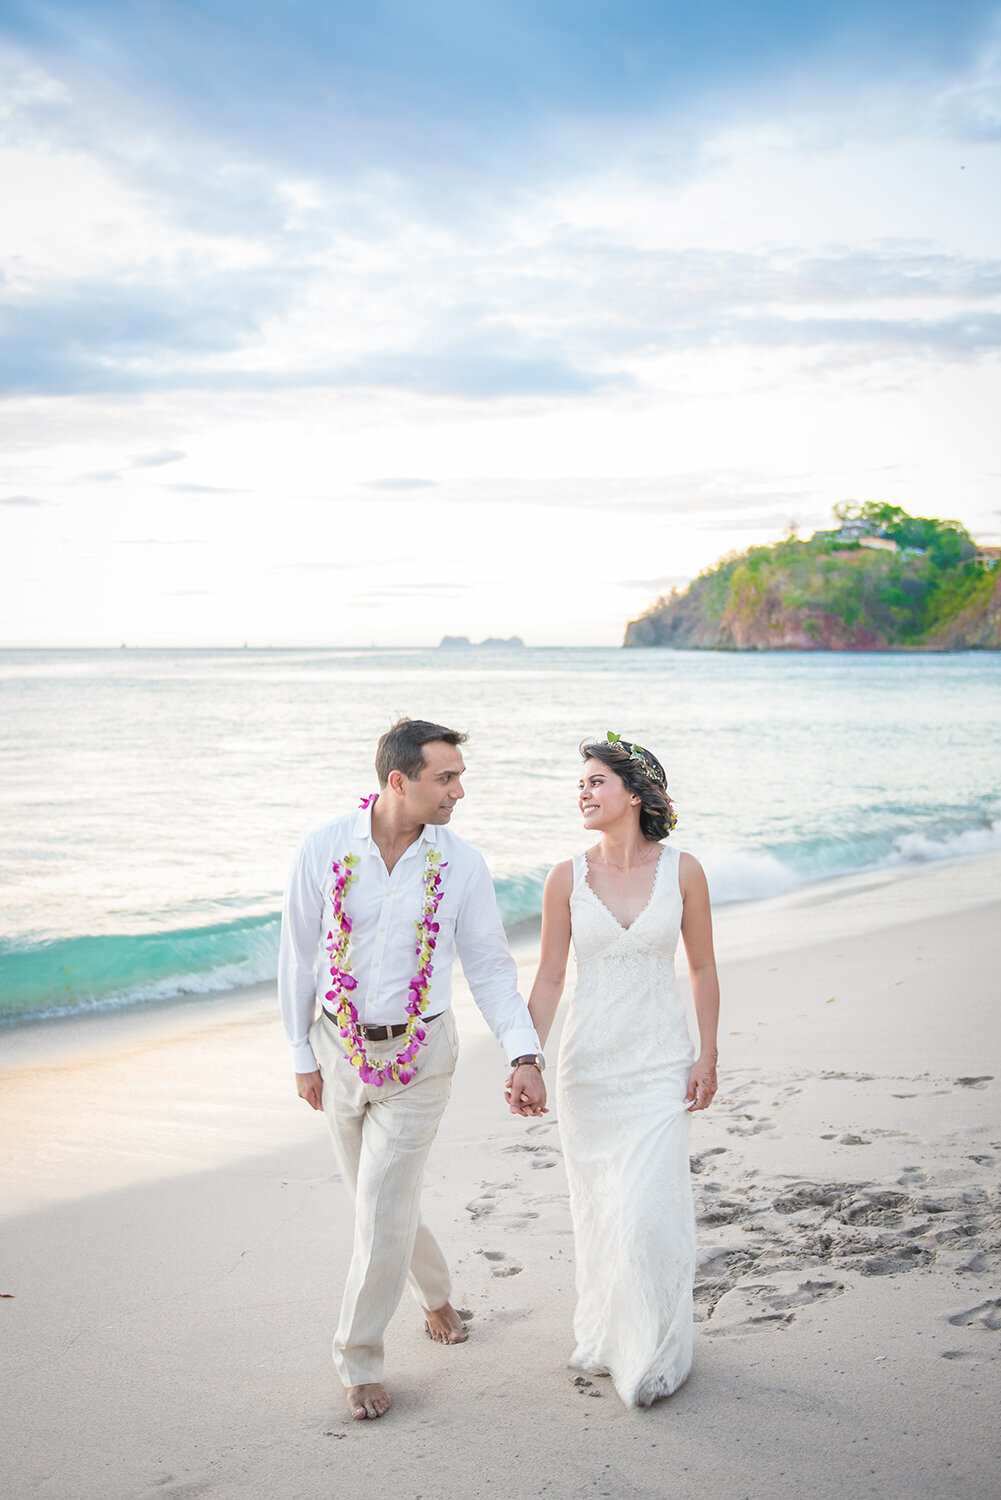 012018 - Margaritaville Wedding Photographer, Playa flamingo wedding, Costa Rica Wedding Photographers, Two Adventurous Souls-225.jpg